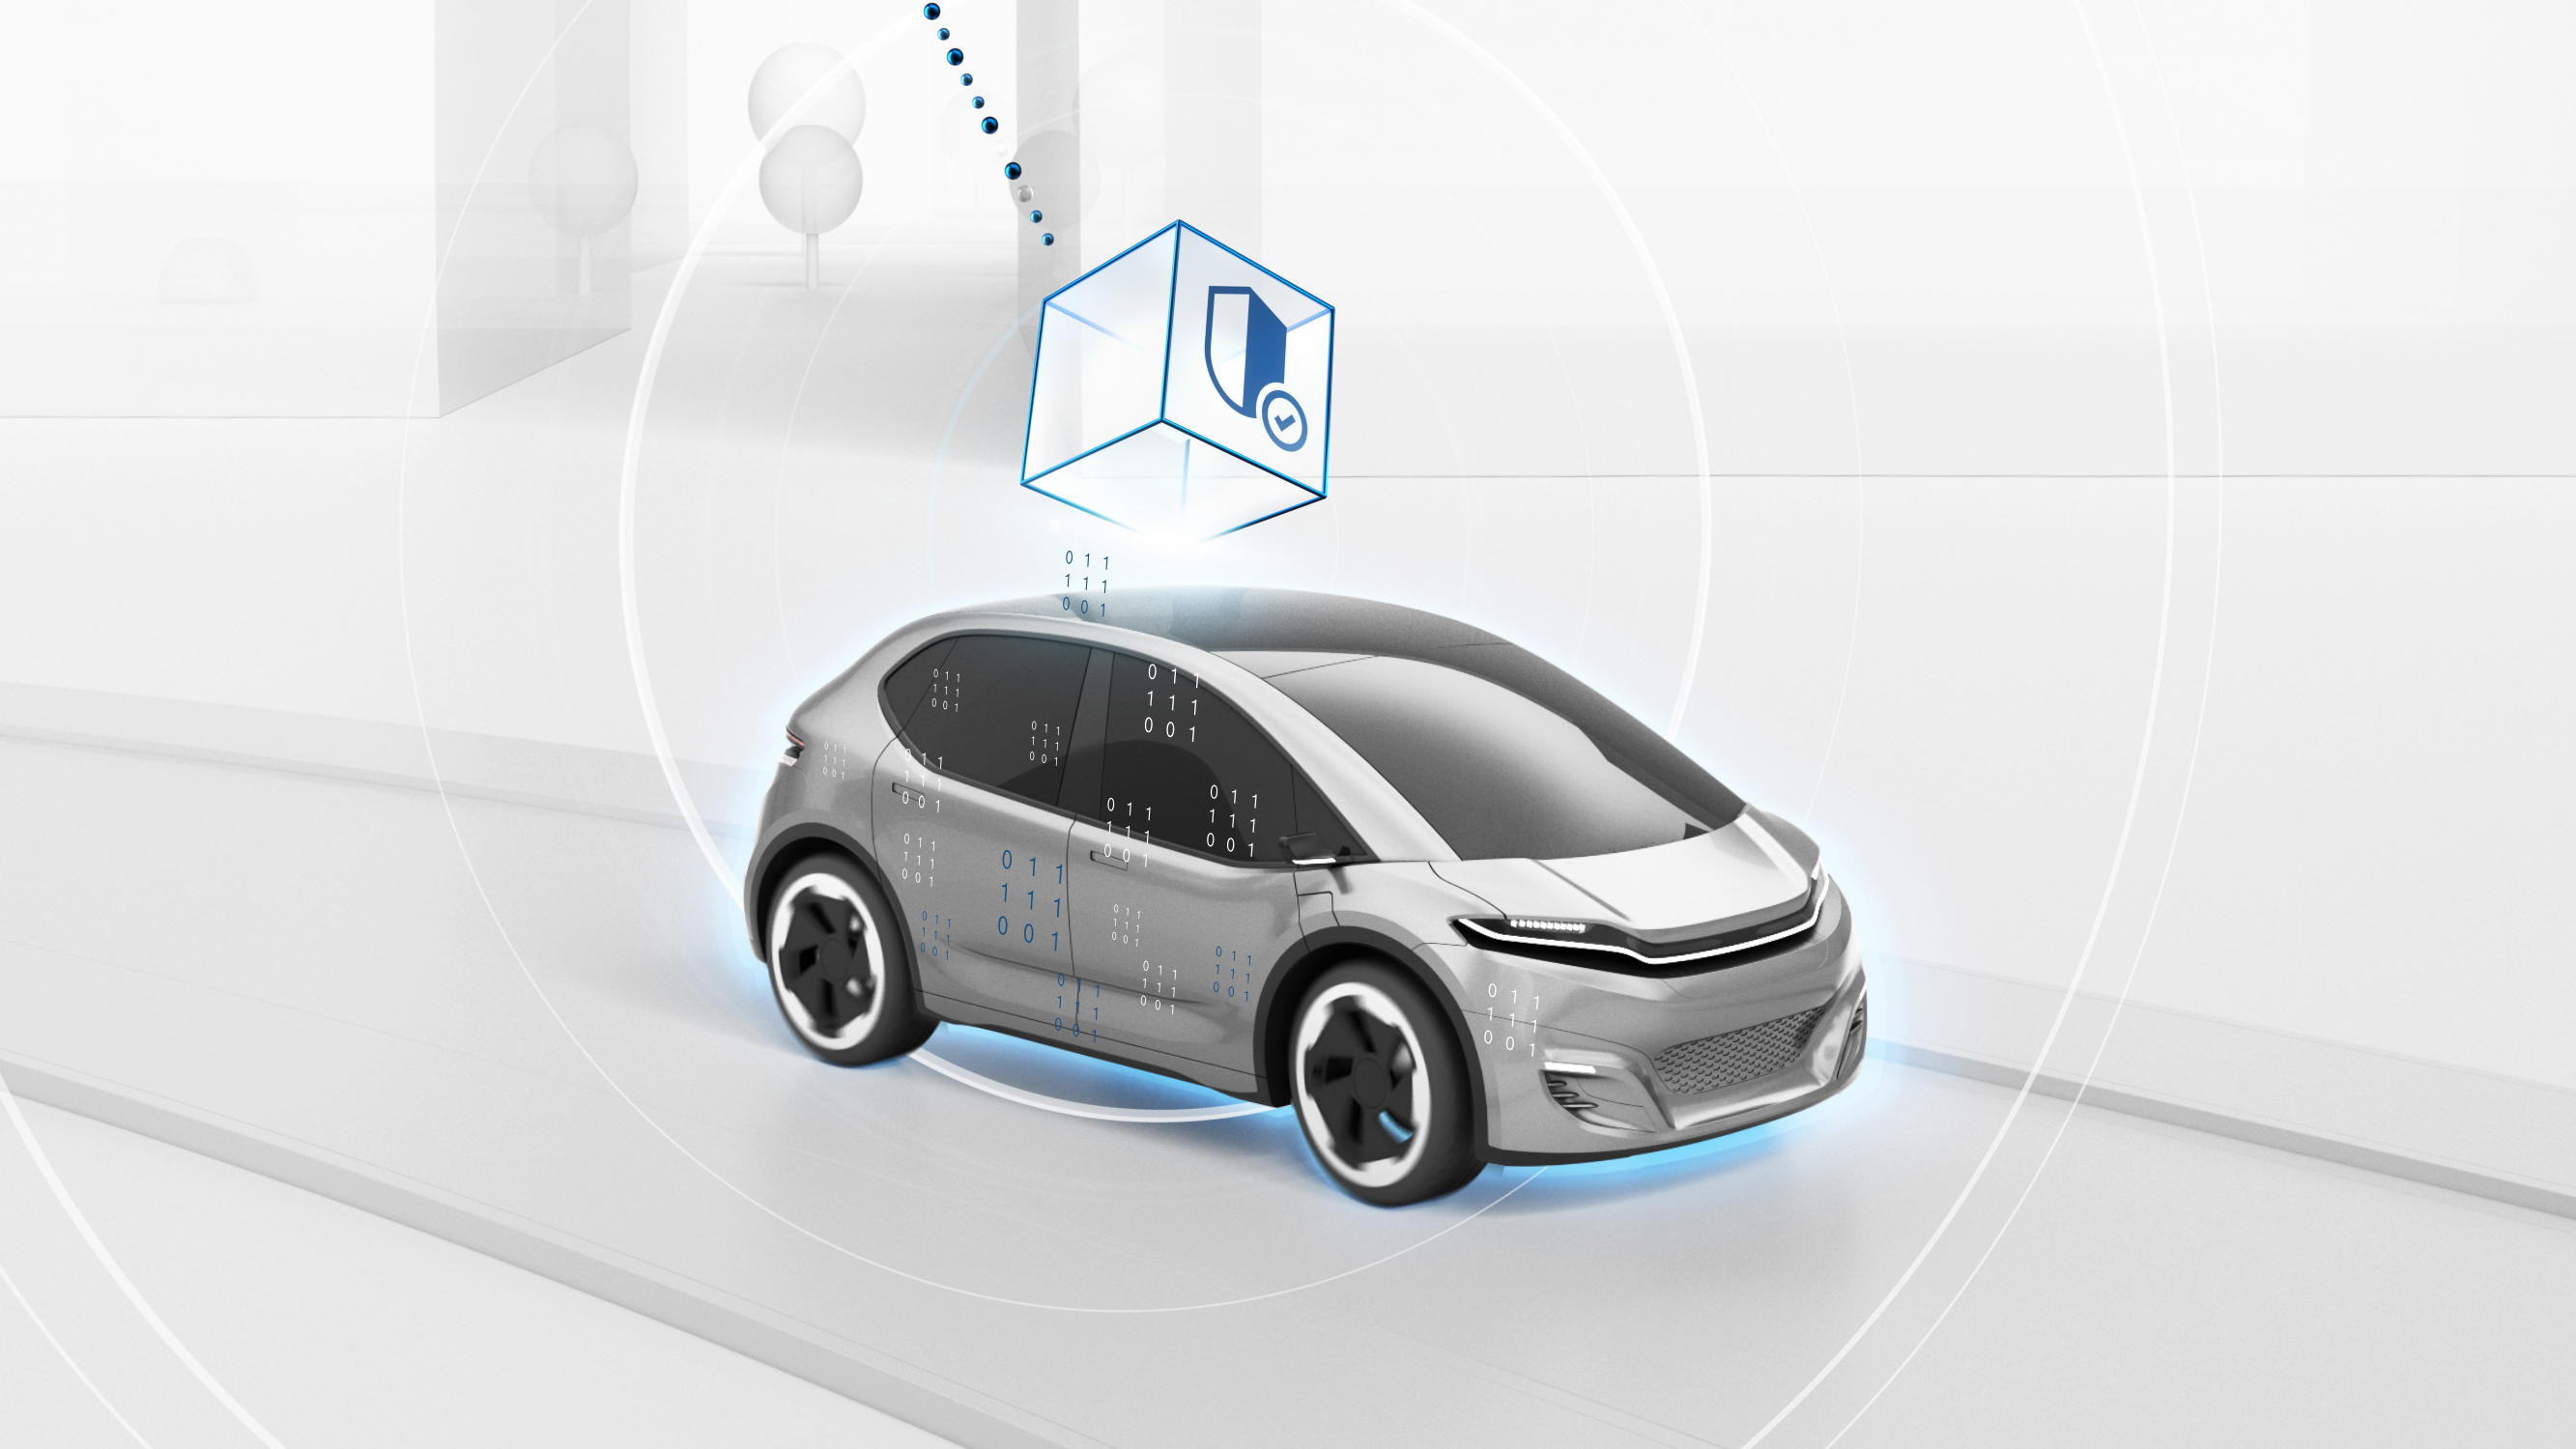 Show car da Bosch: carro conectado e definido por software